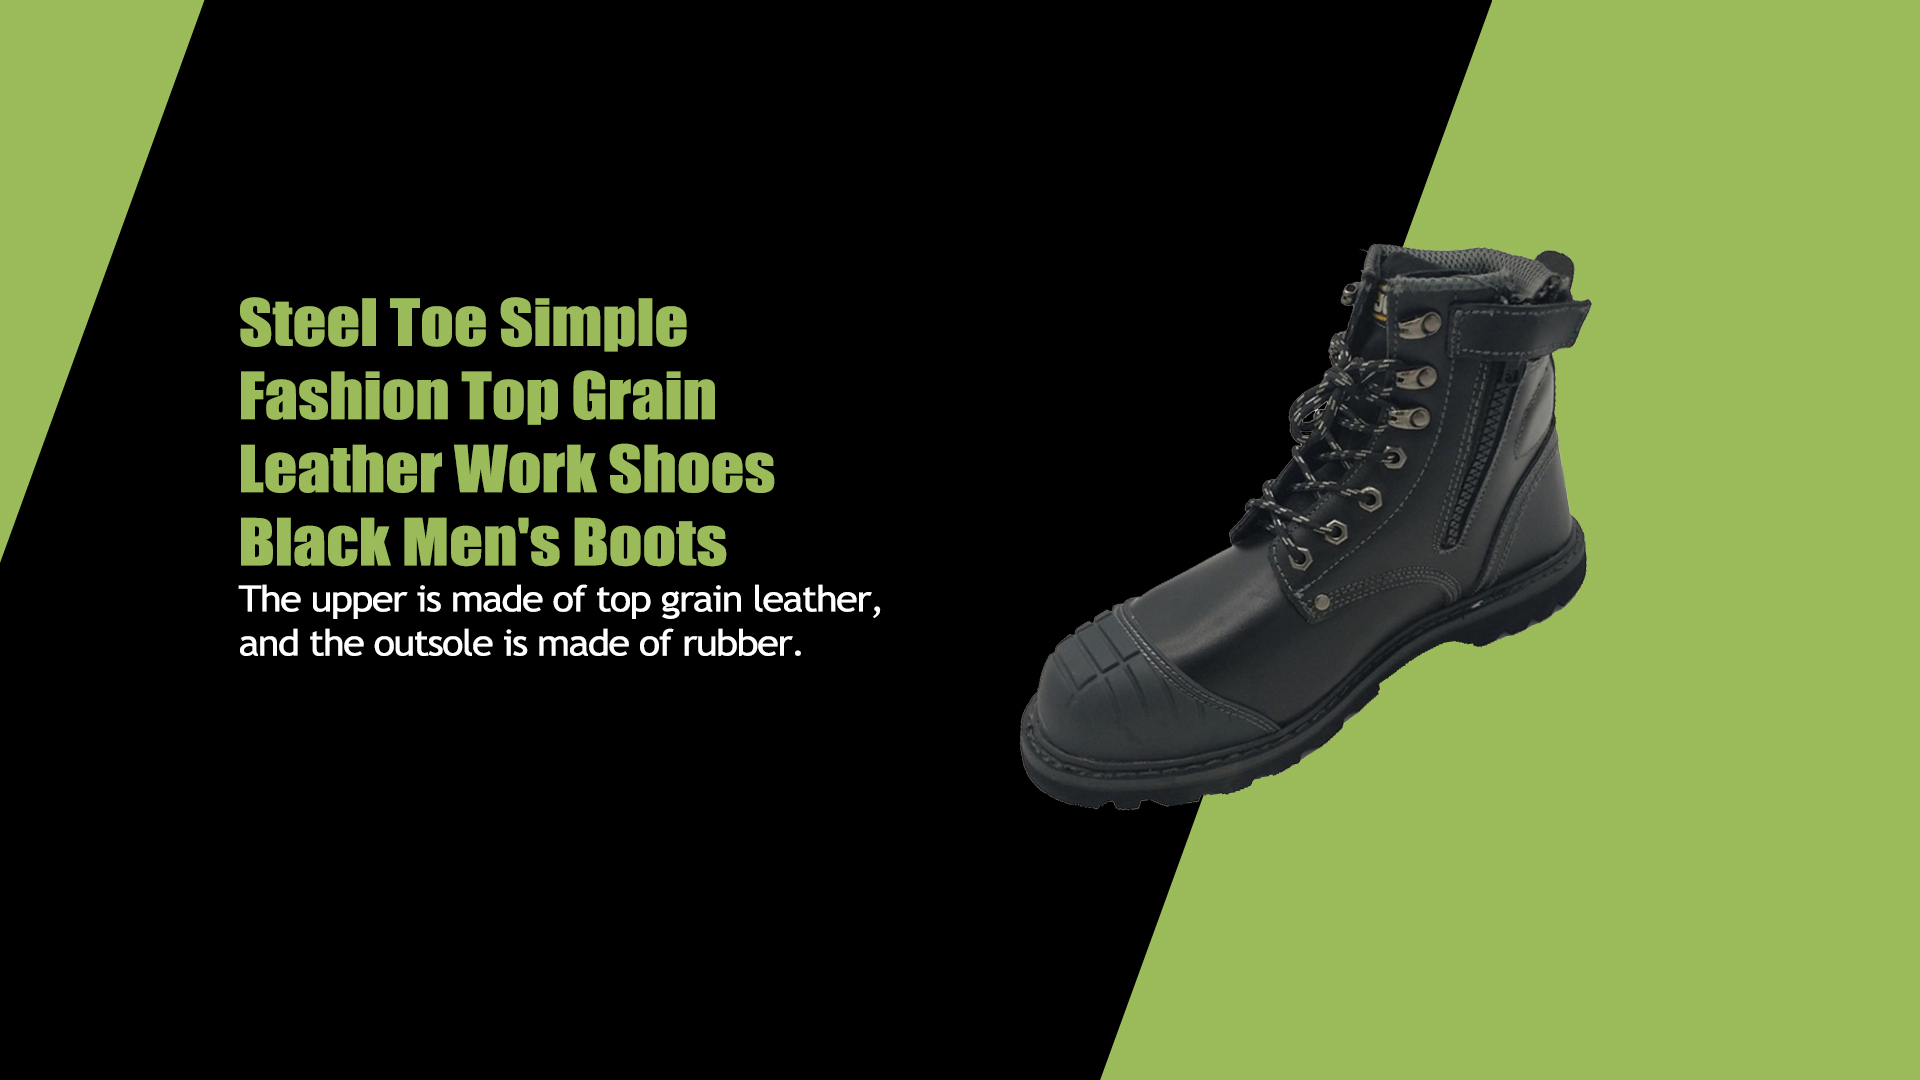 Steel Toe Simple Fashion Top Grain Leather Work Shoes Black Men's Boots